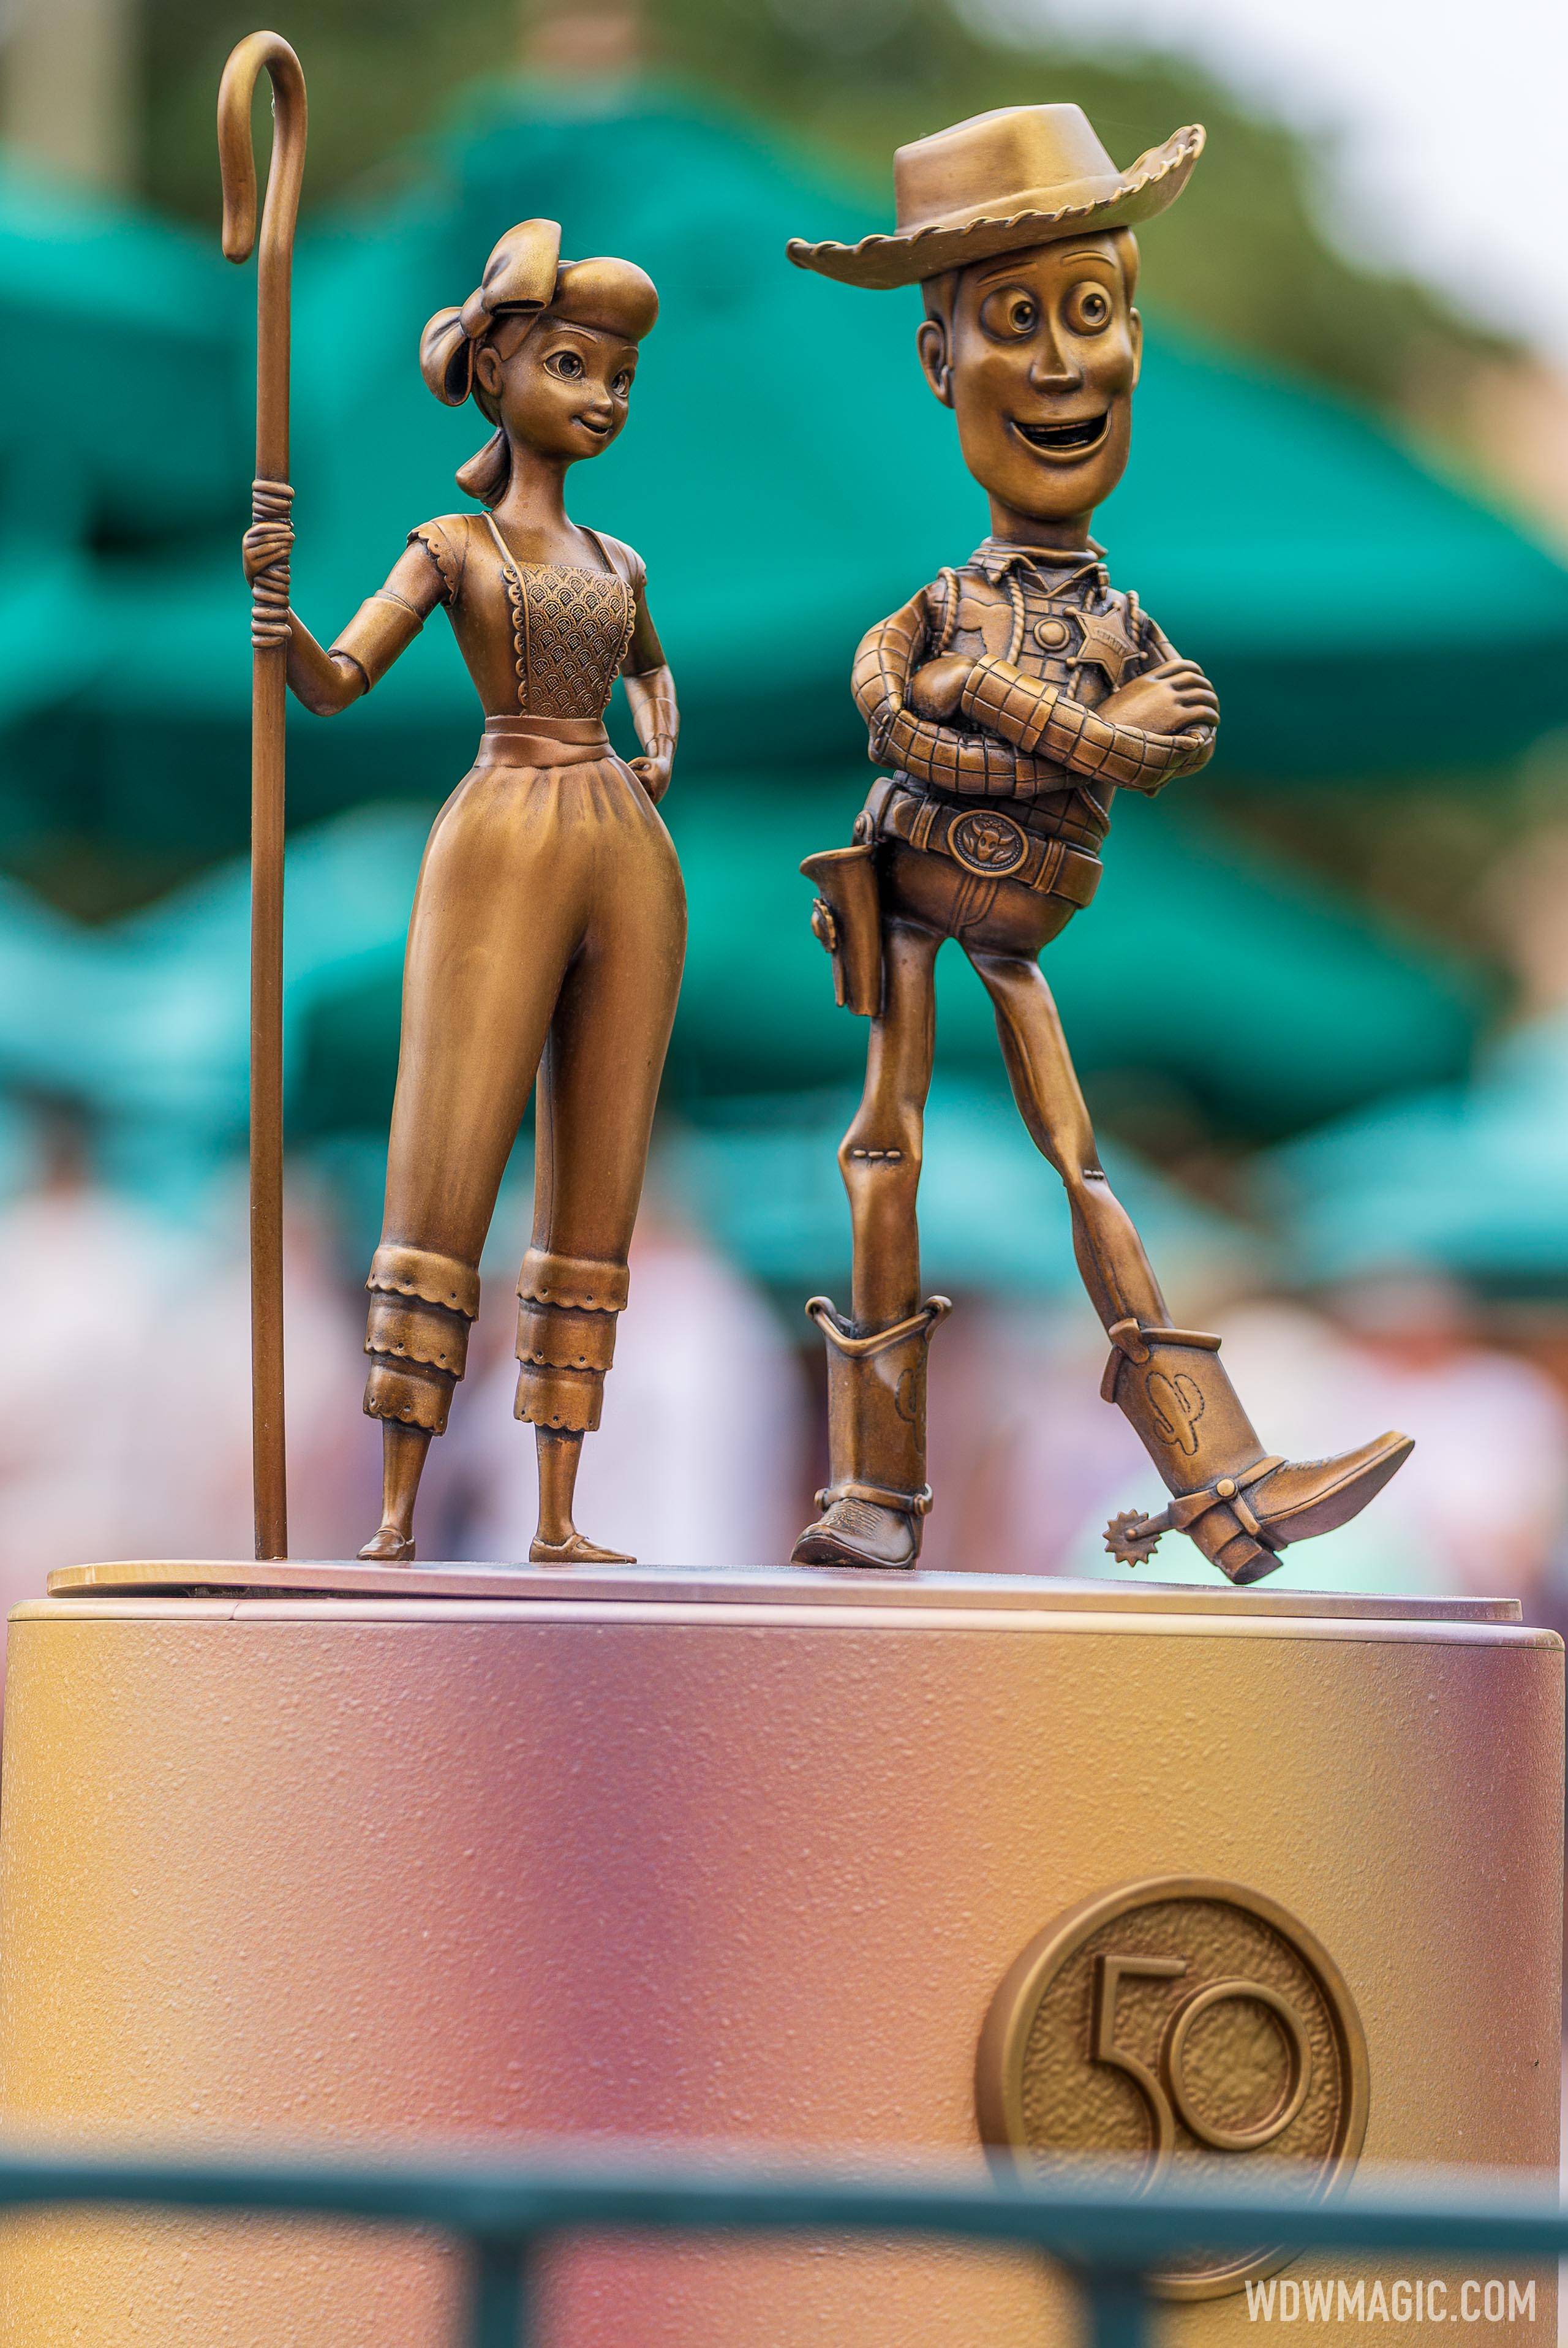 Disney Fab 50 golden character statues at Disney's Hollywood Studios